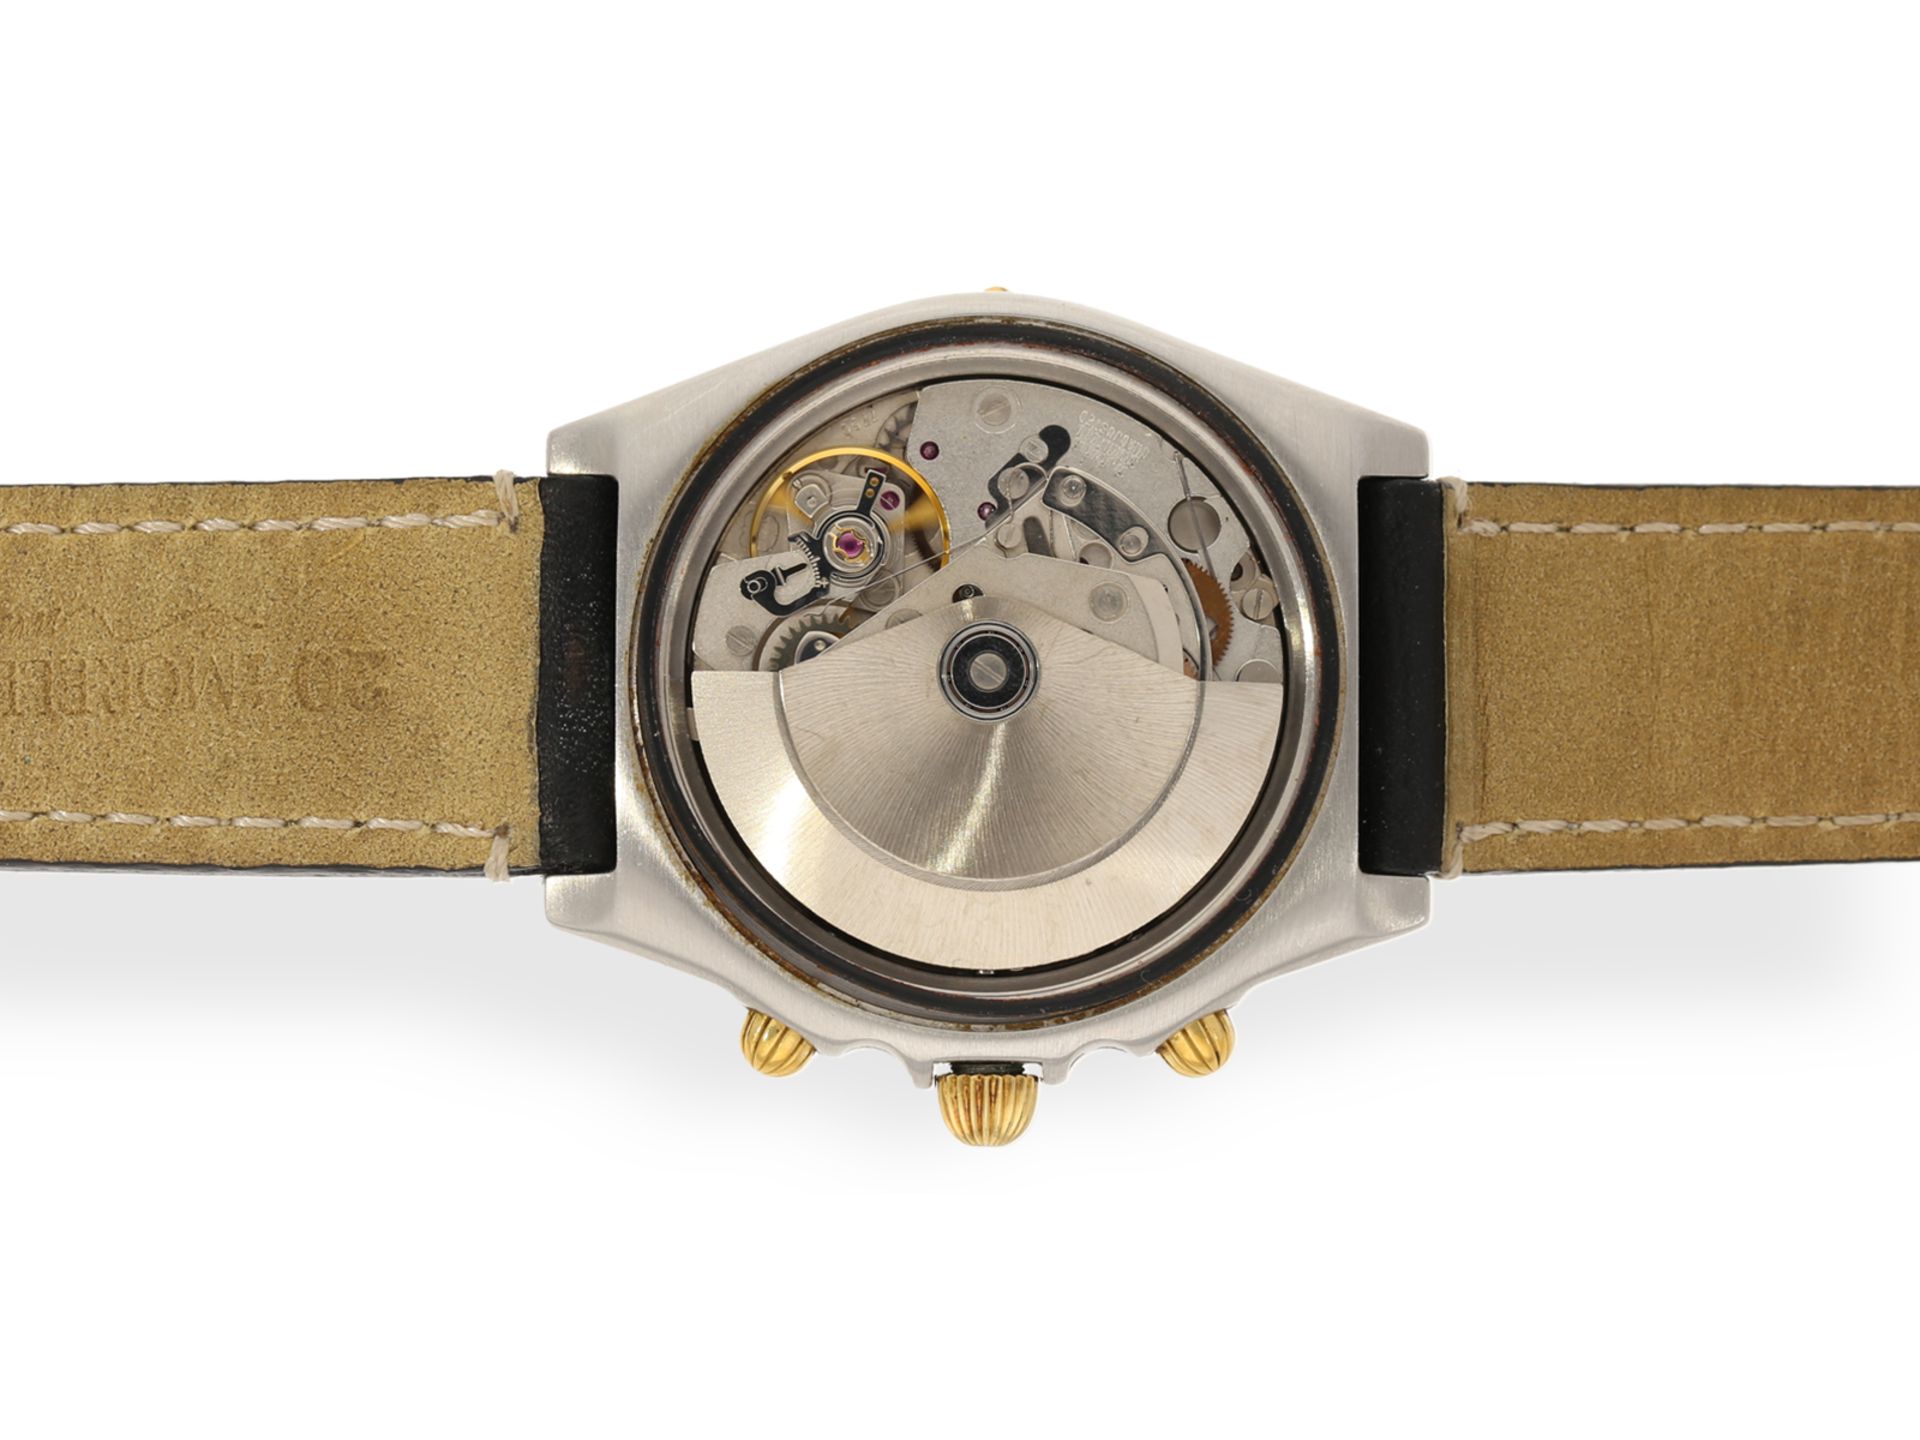 Armbanduhr: sportlicher Breitling- Chronograph "Chronomat Ref. 81.950", Stahl/Gold - Bild 4 aus 6